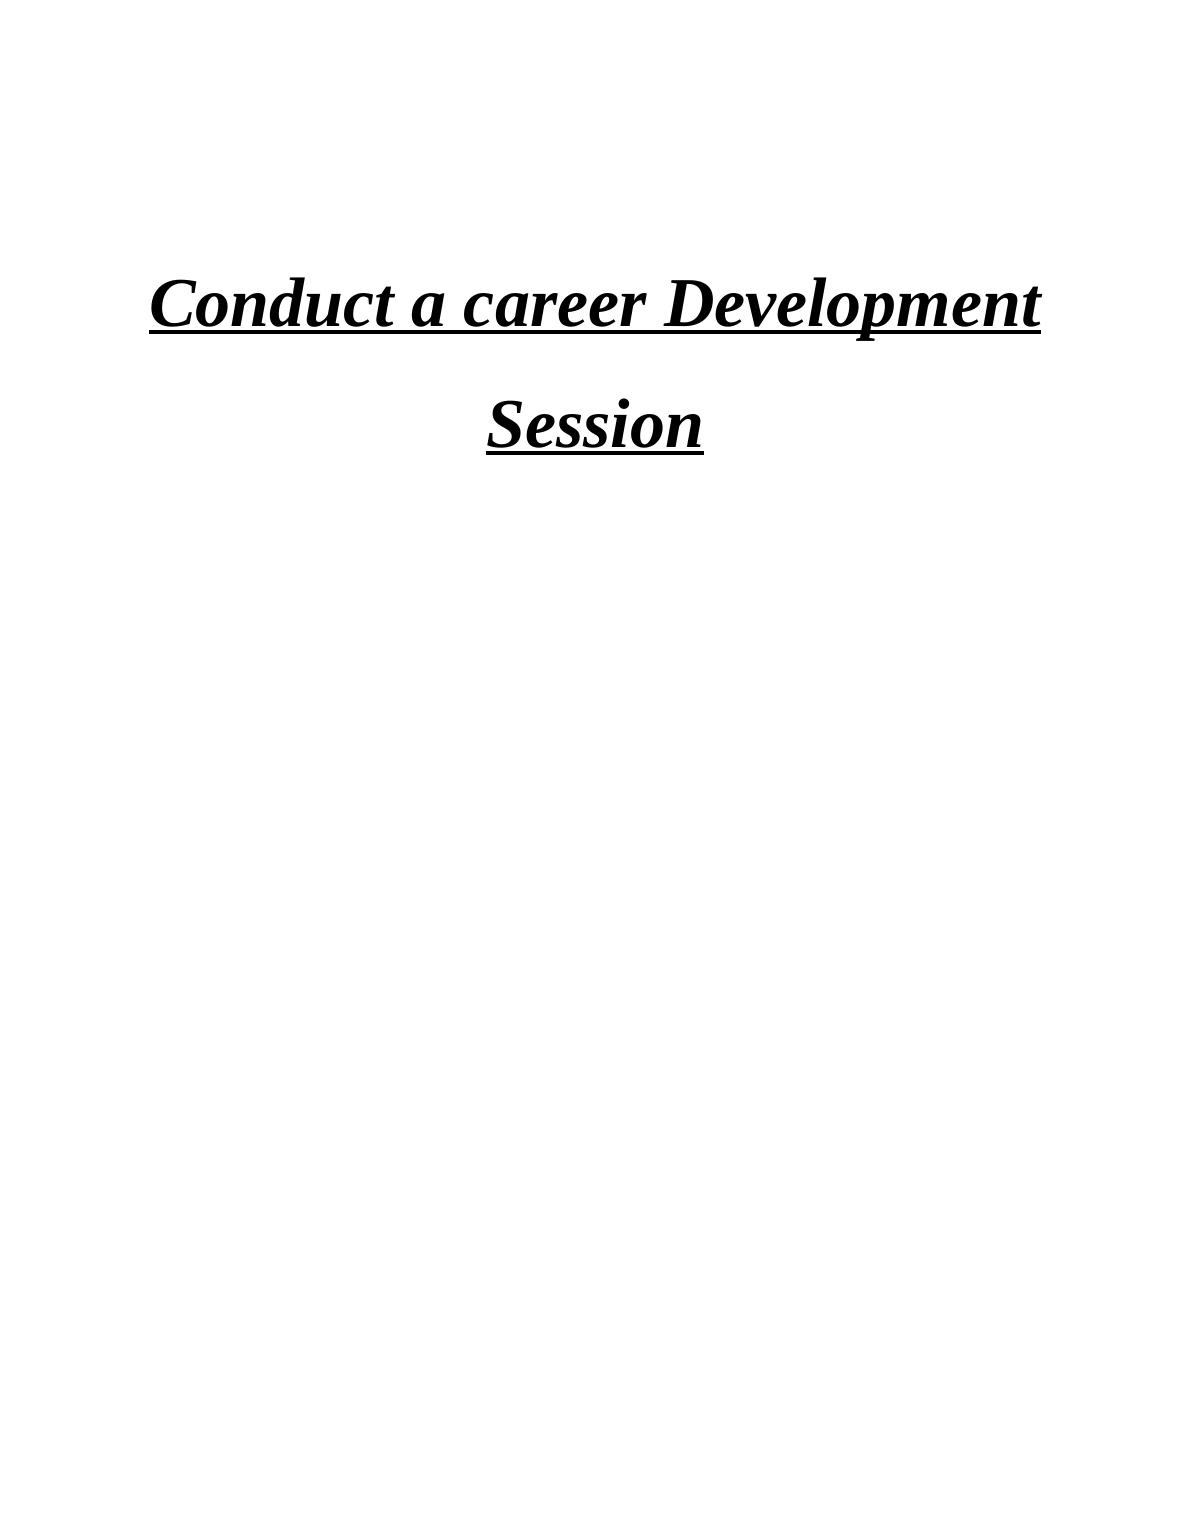 Career Development Session_1